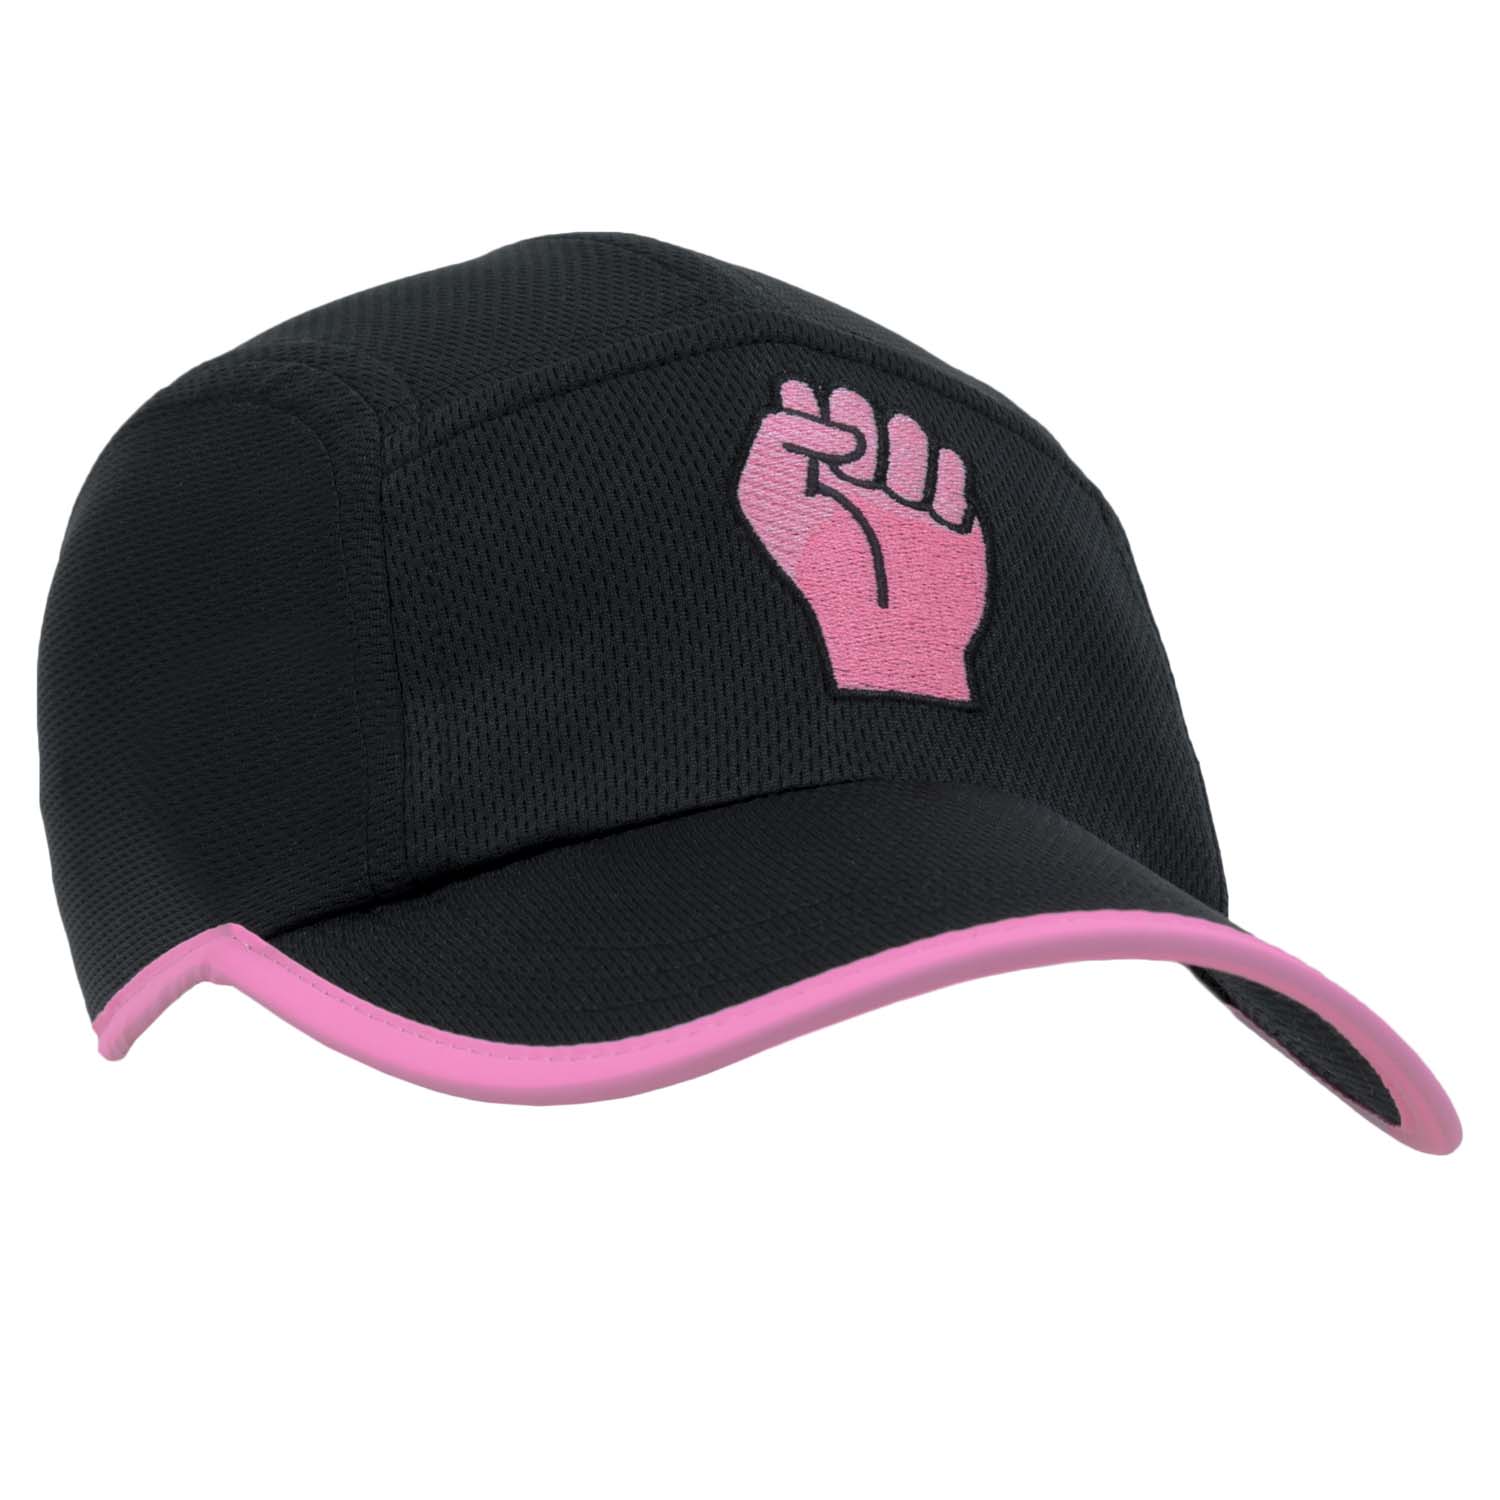 BCA Black/Pink Race Hat